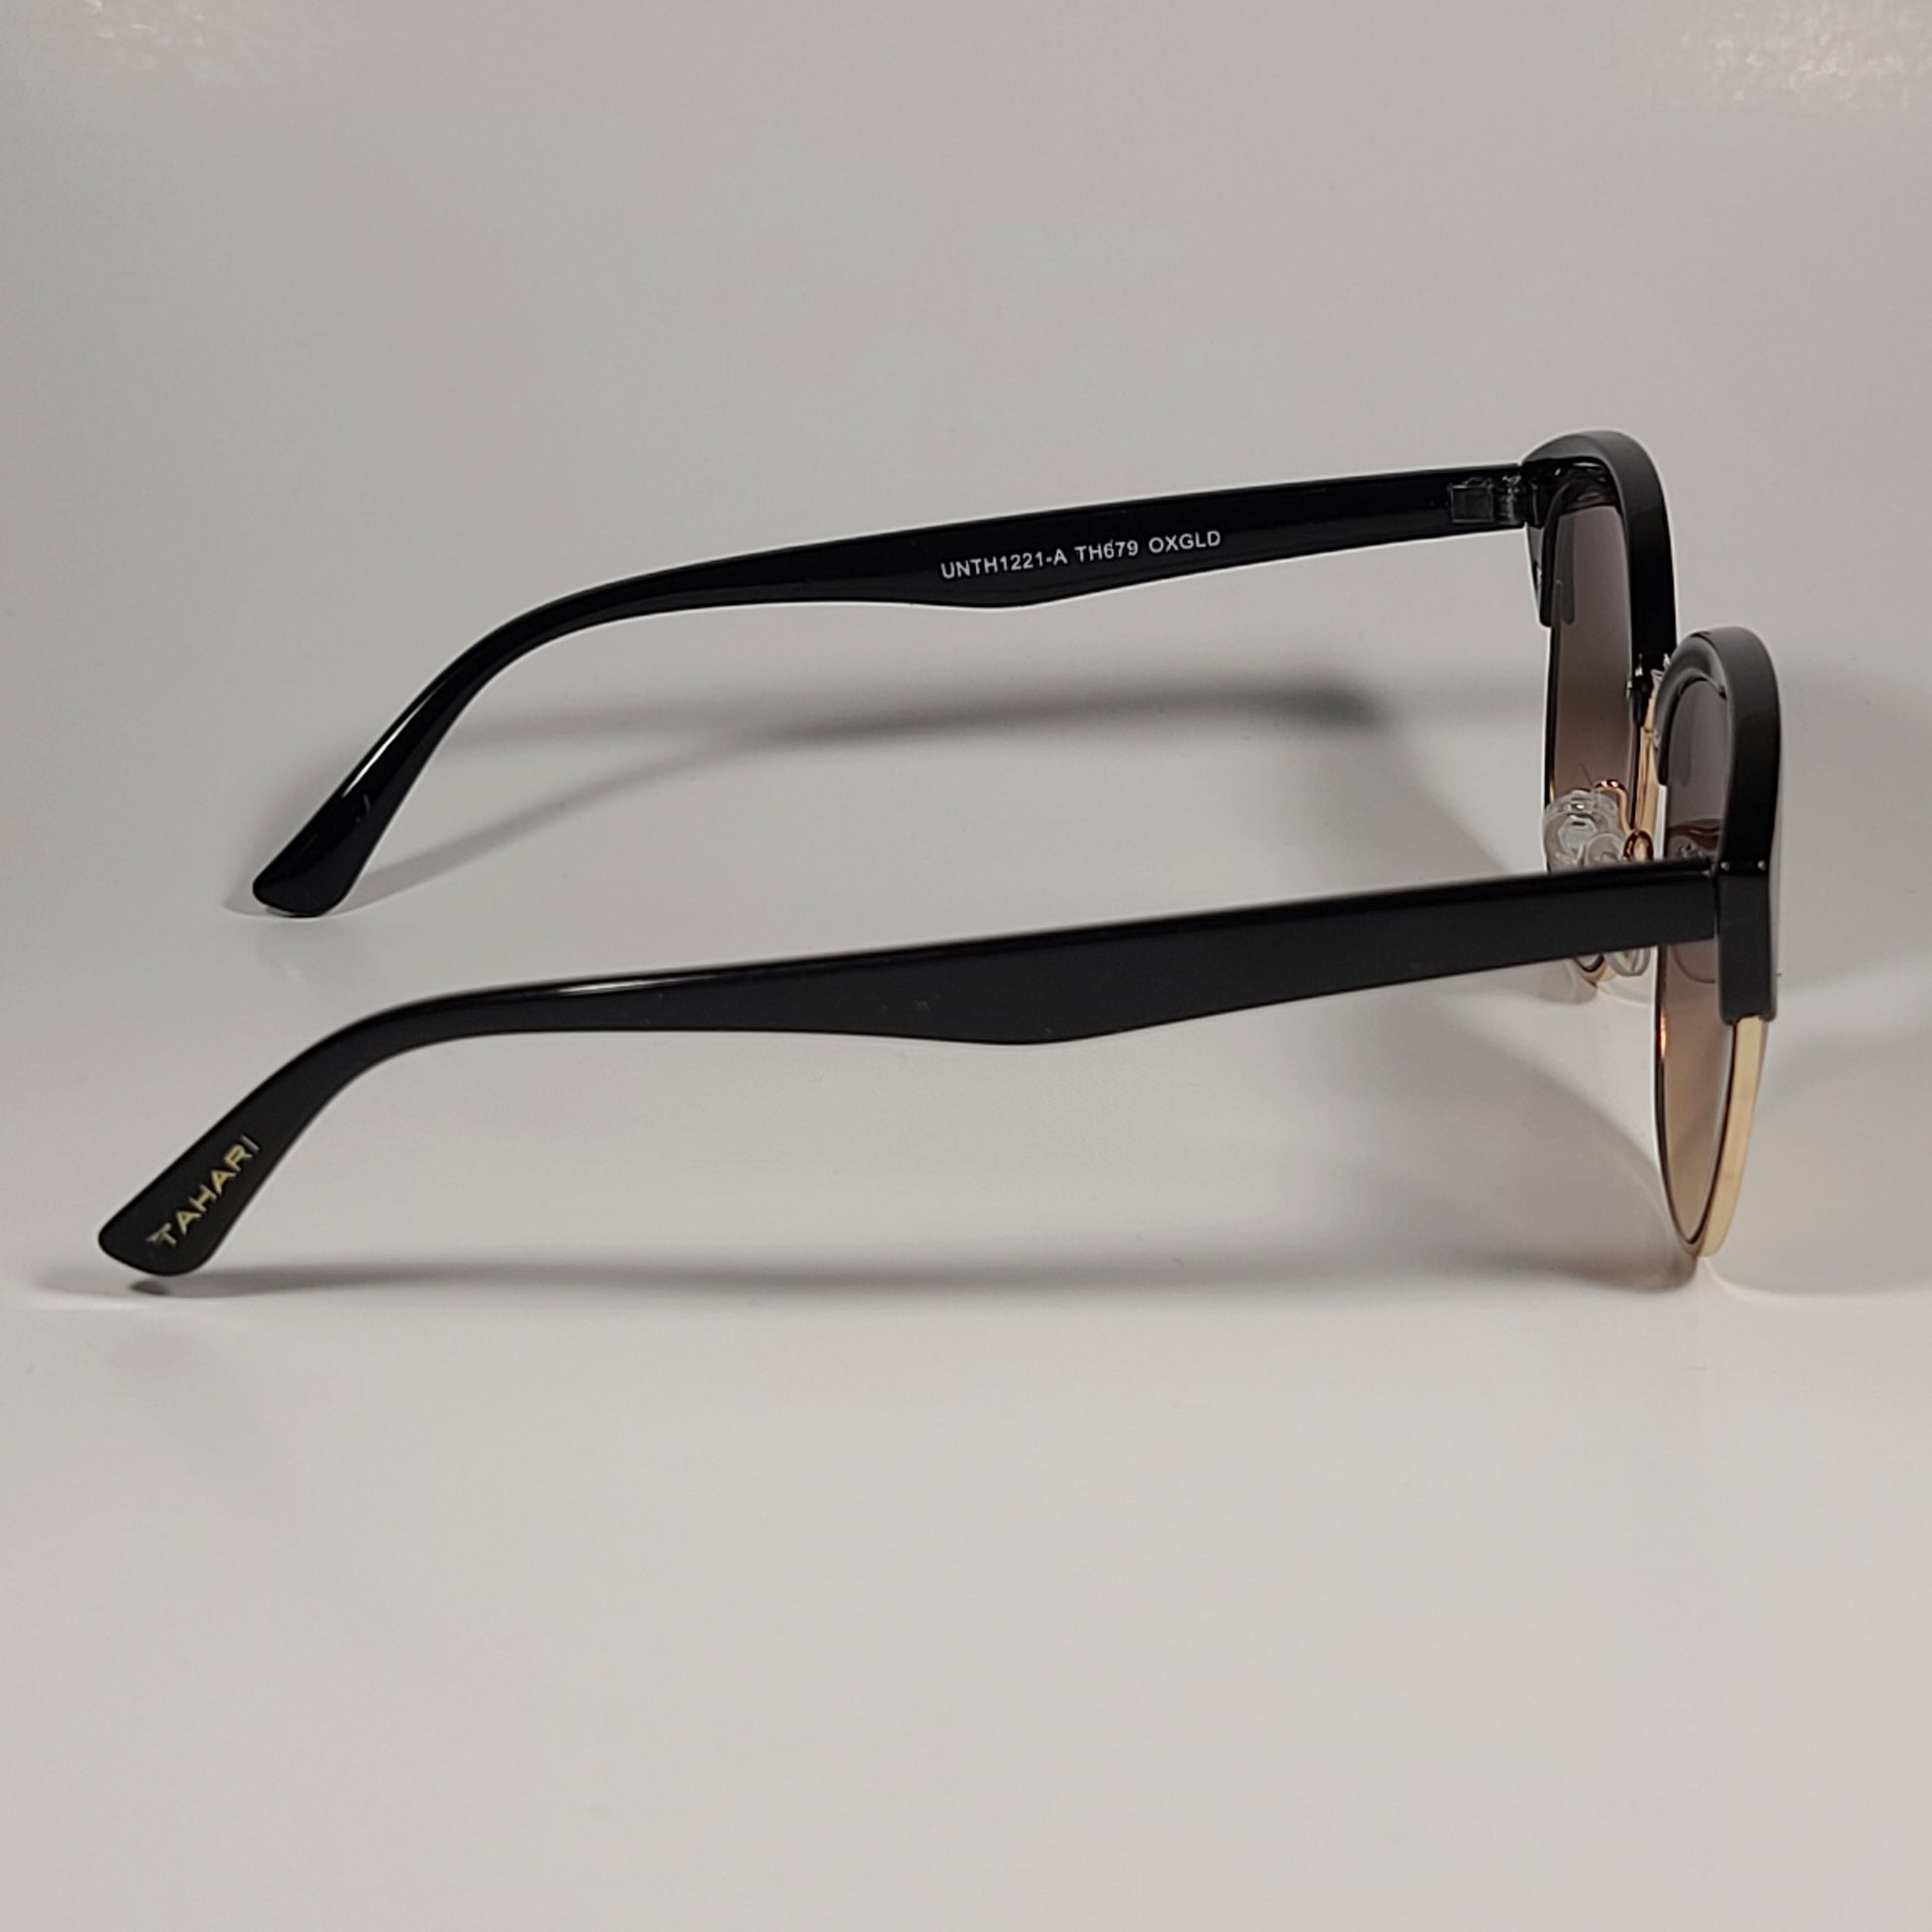 Tahari Round Club Sunglasses Black Gold Frame Brown Gradient Lens TH679 OXGLD - Sunglasses